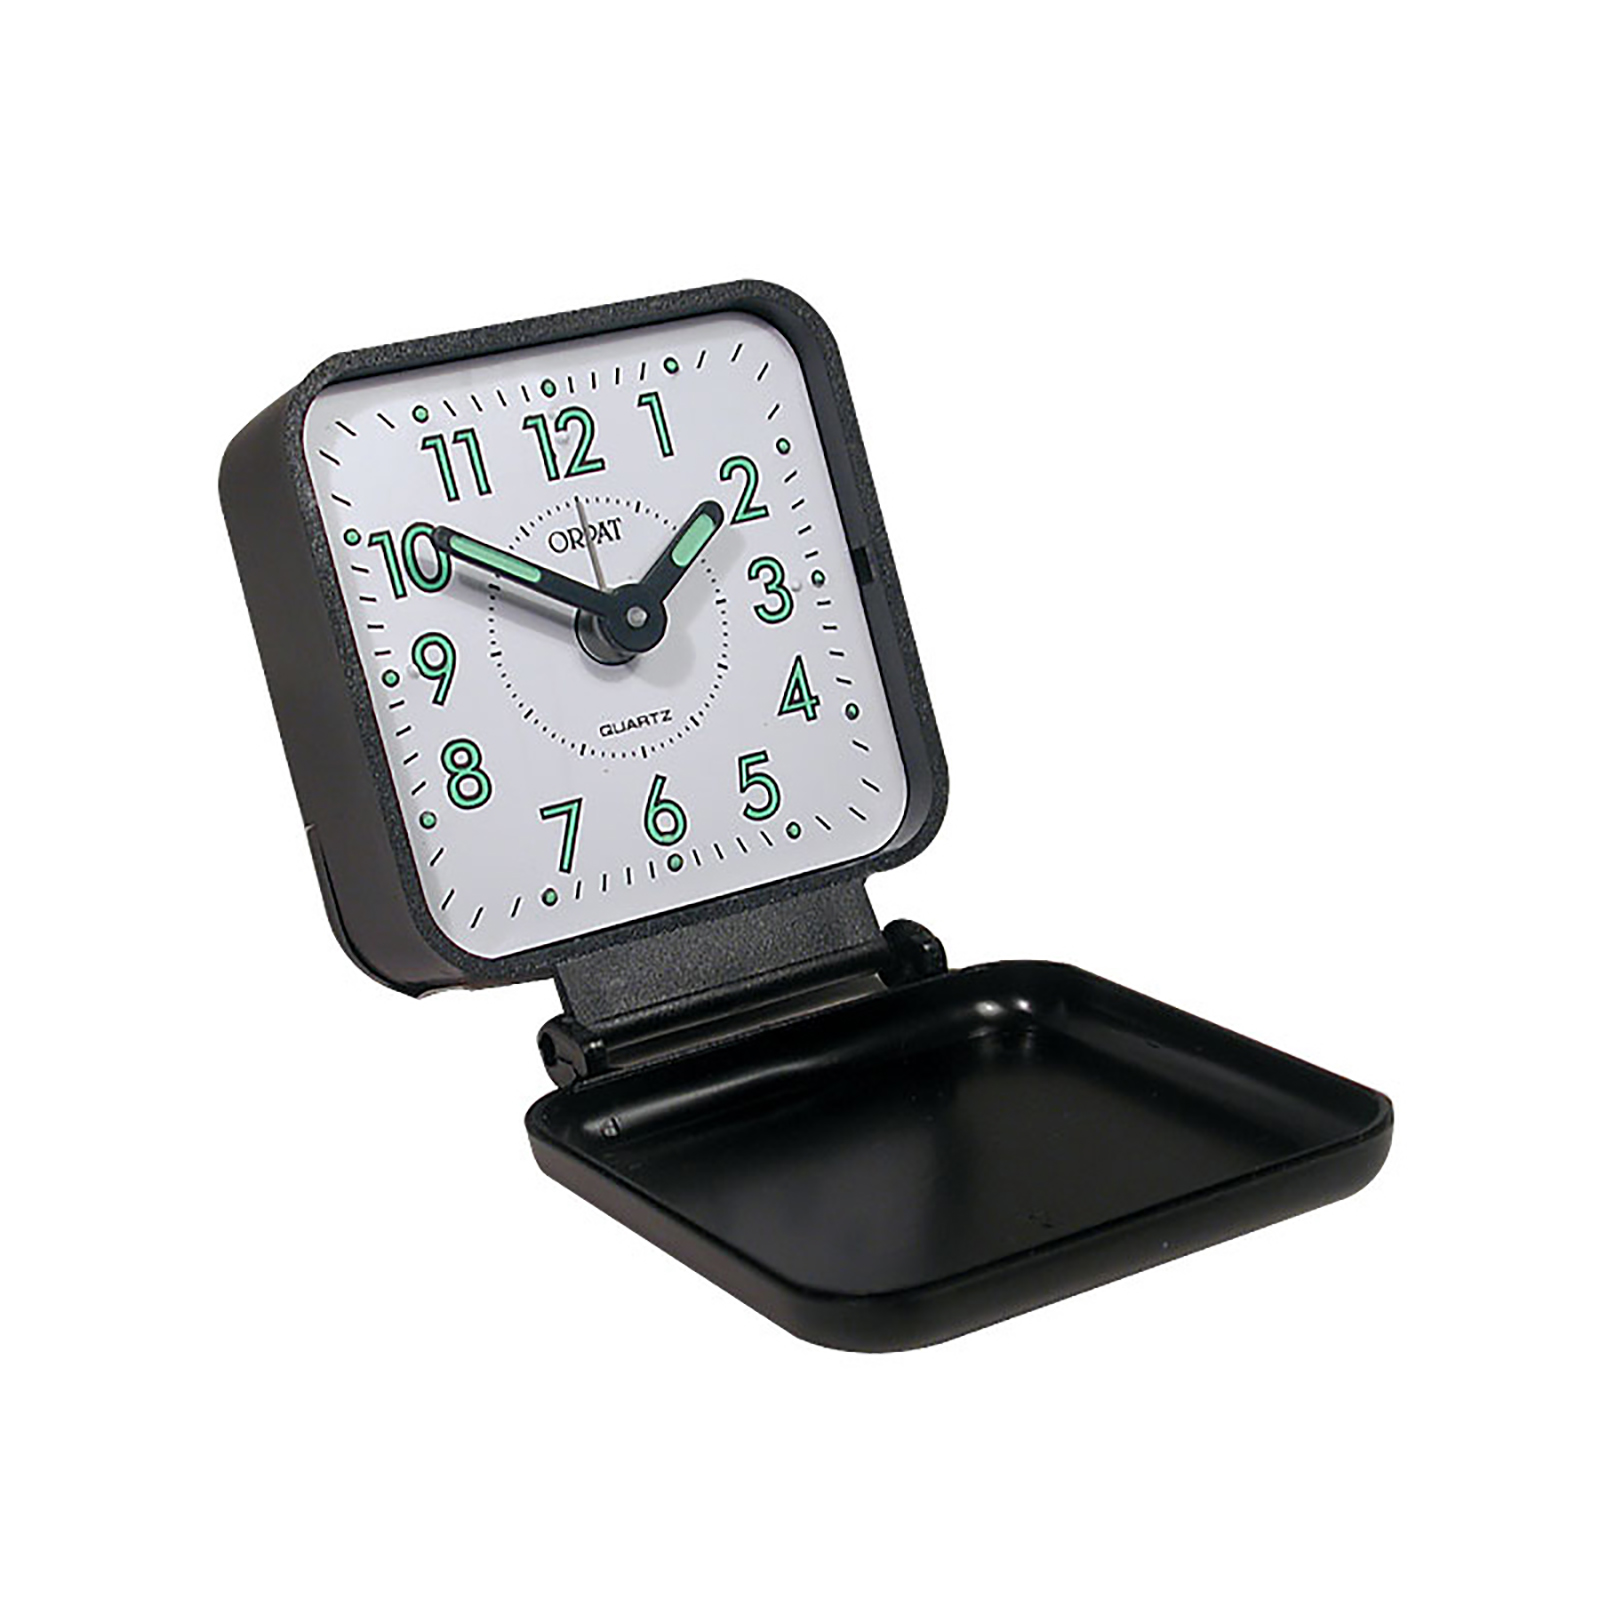 MaxiAids 721 Braille Travel Alarm Clock